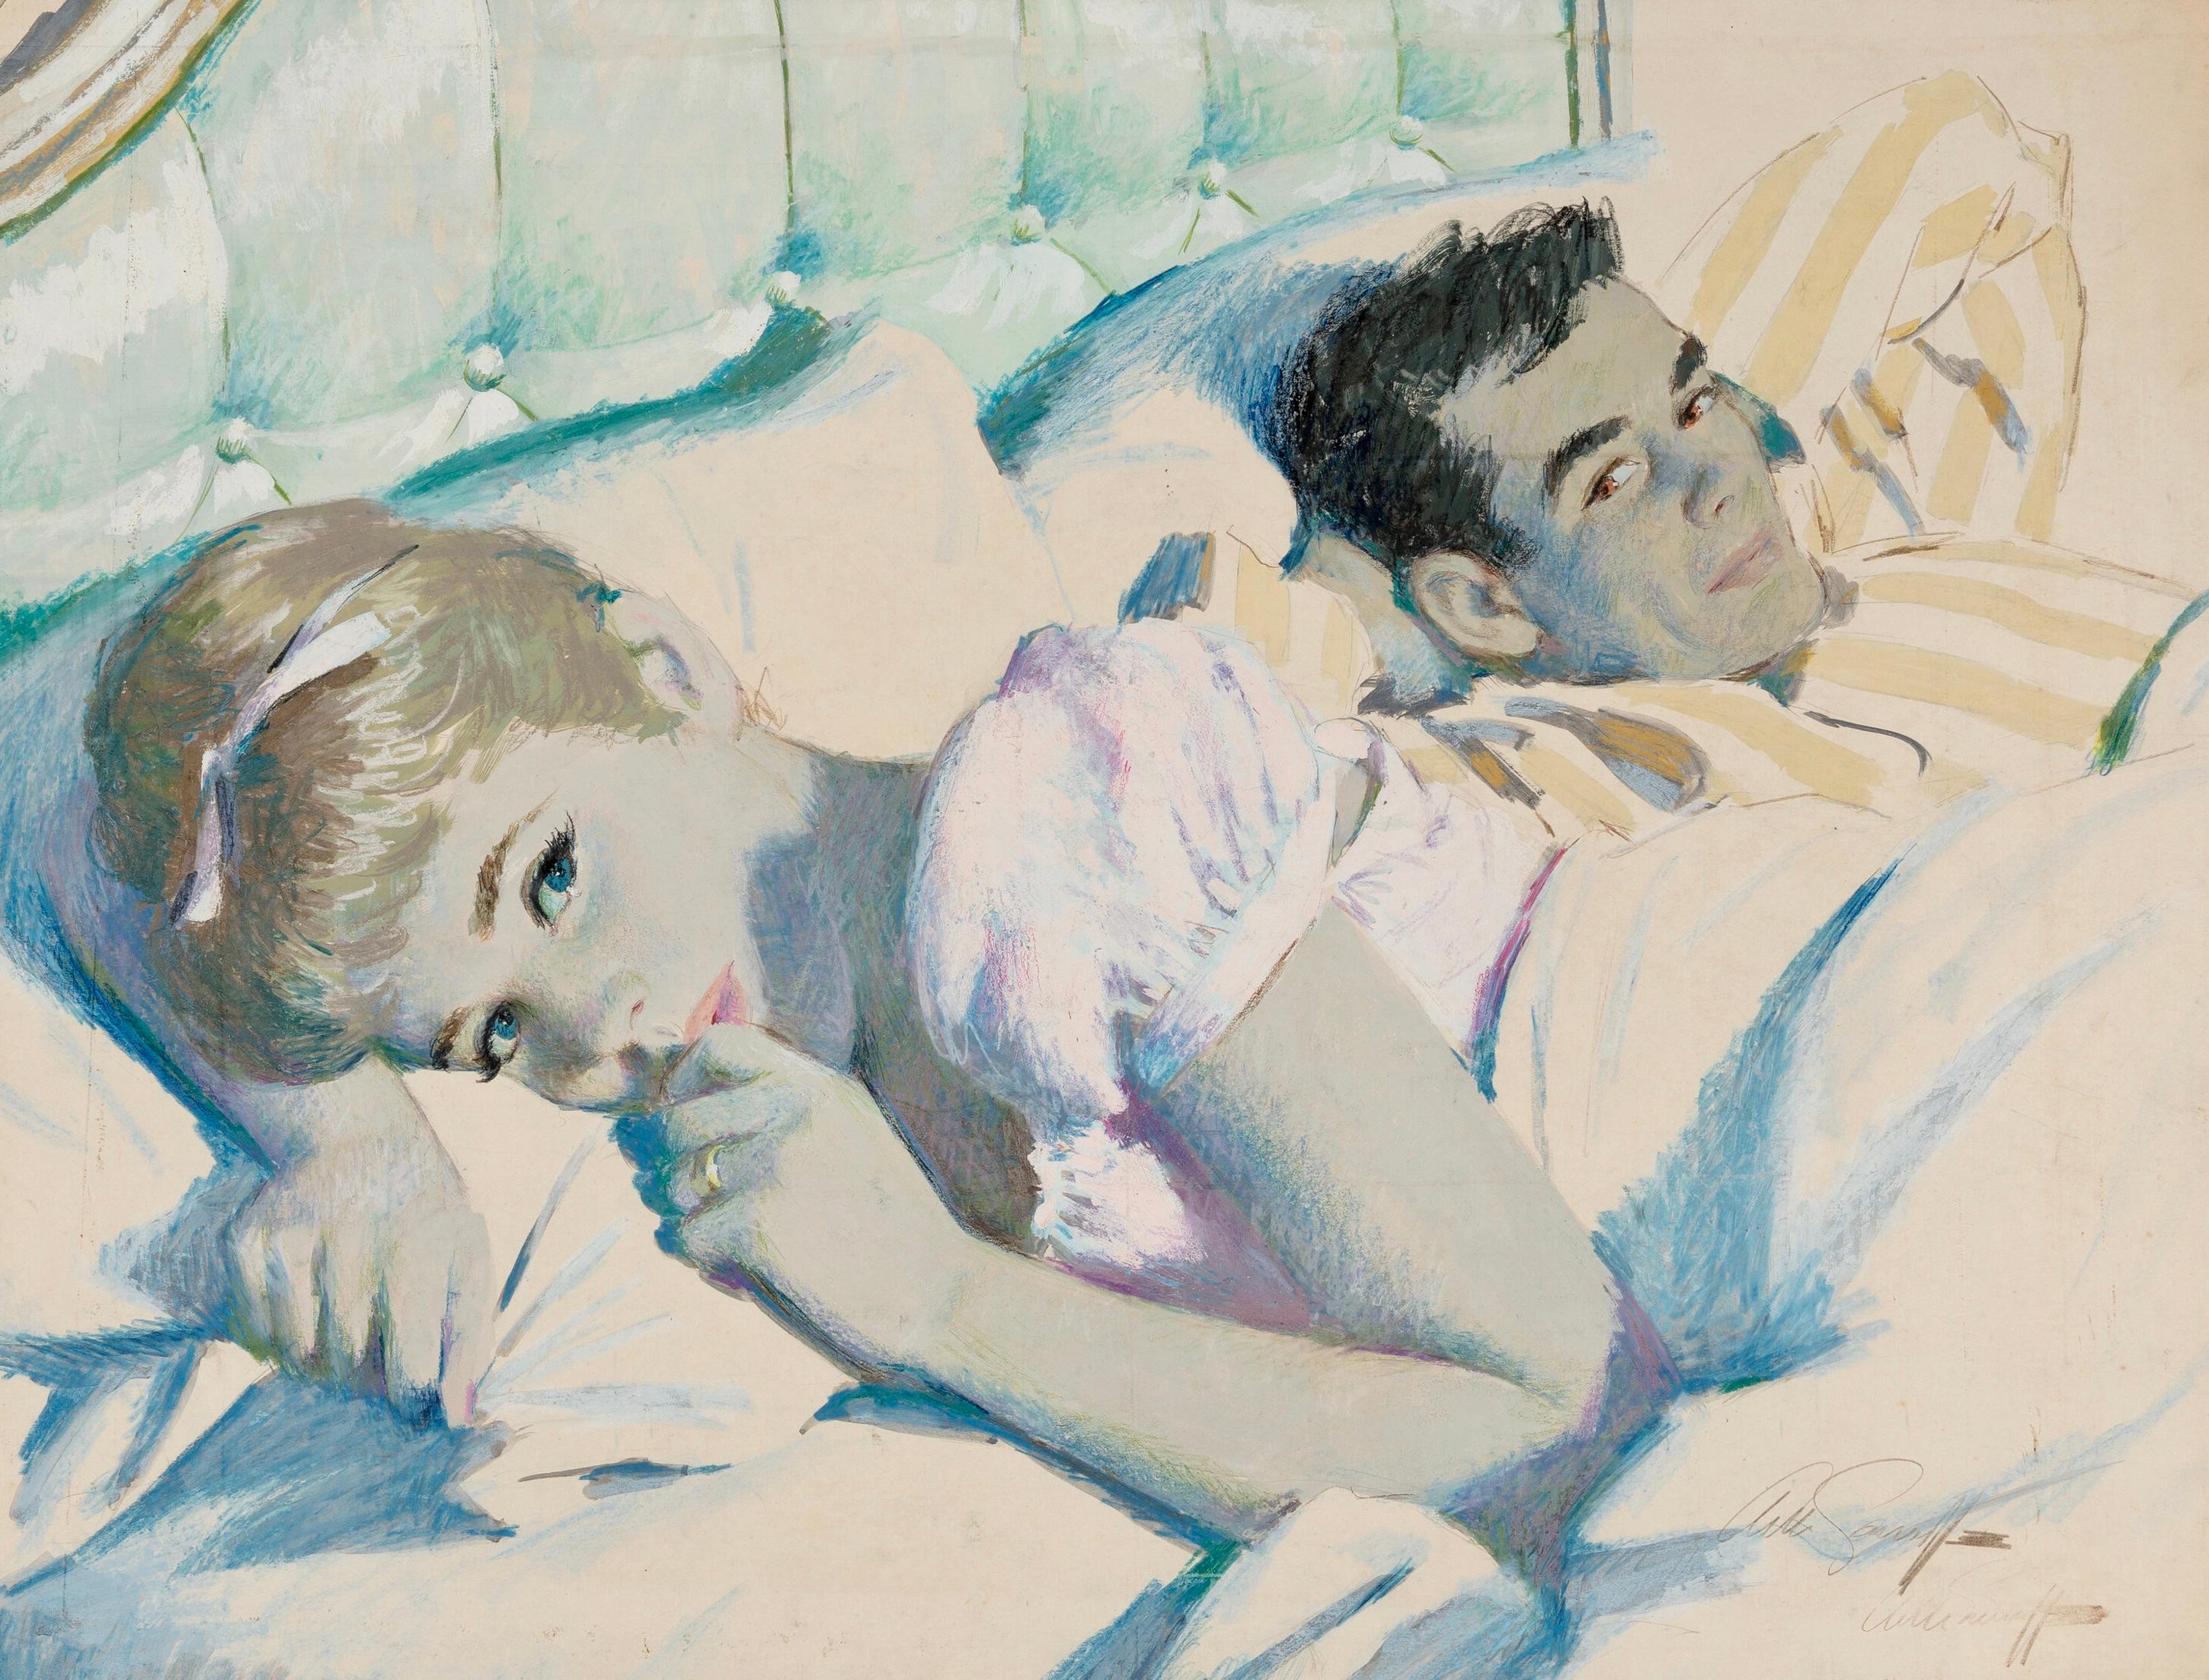 Goodnight - Painting by Arthur Sarnoff